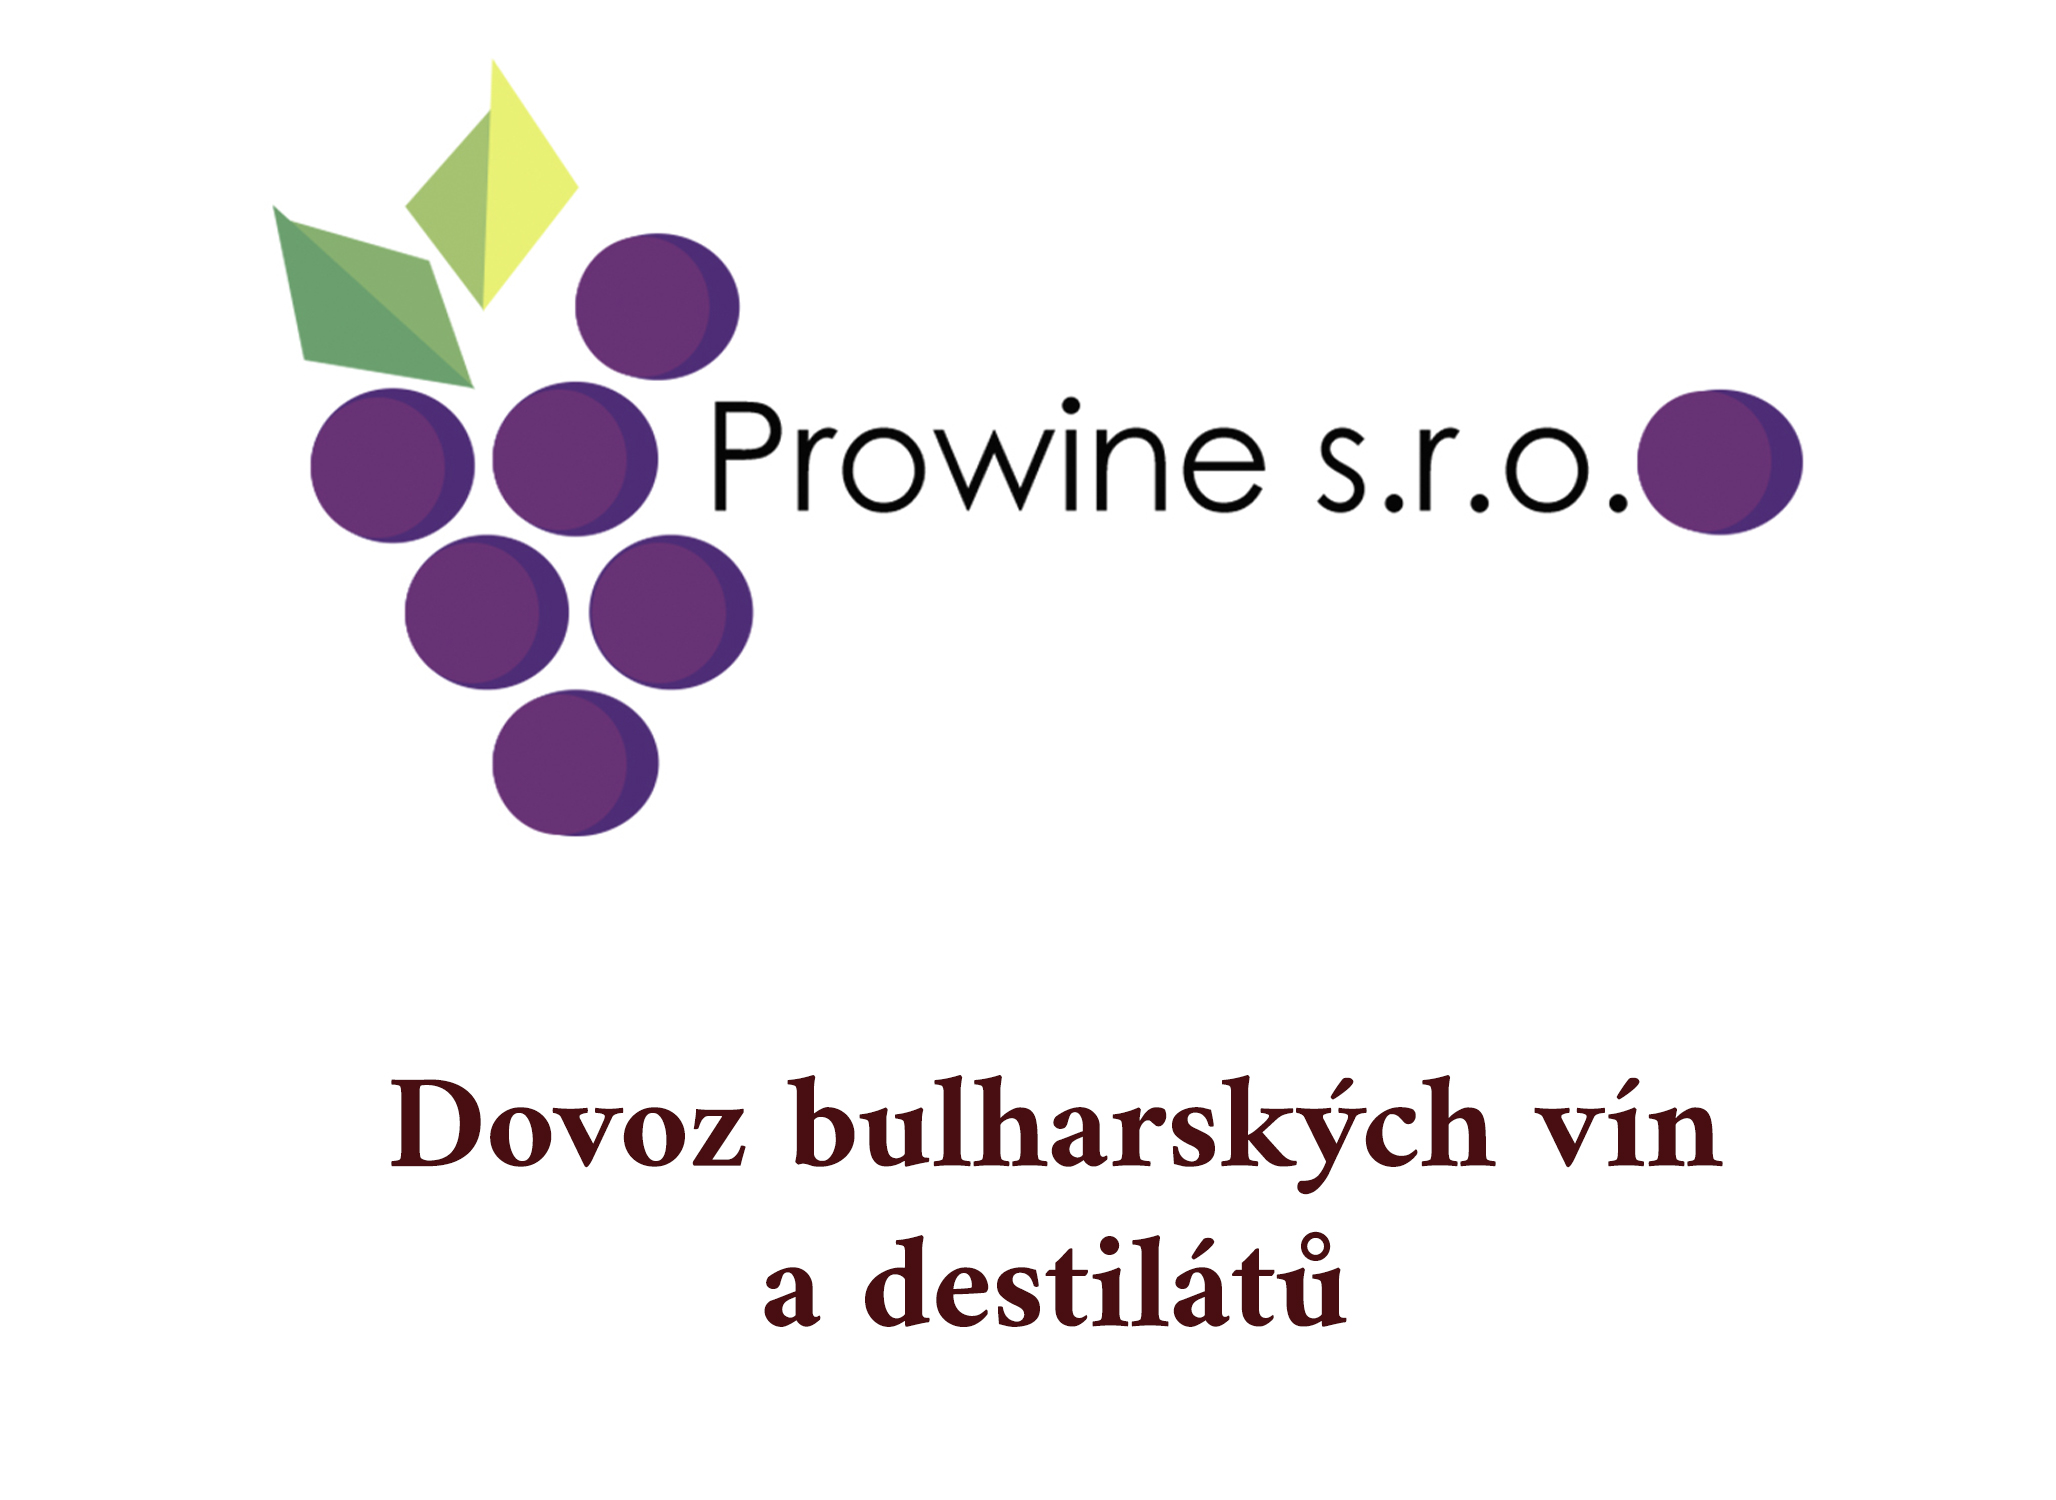 Pro wine